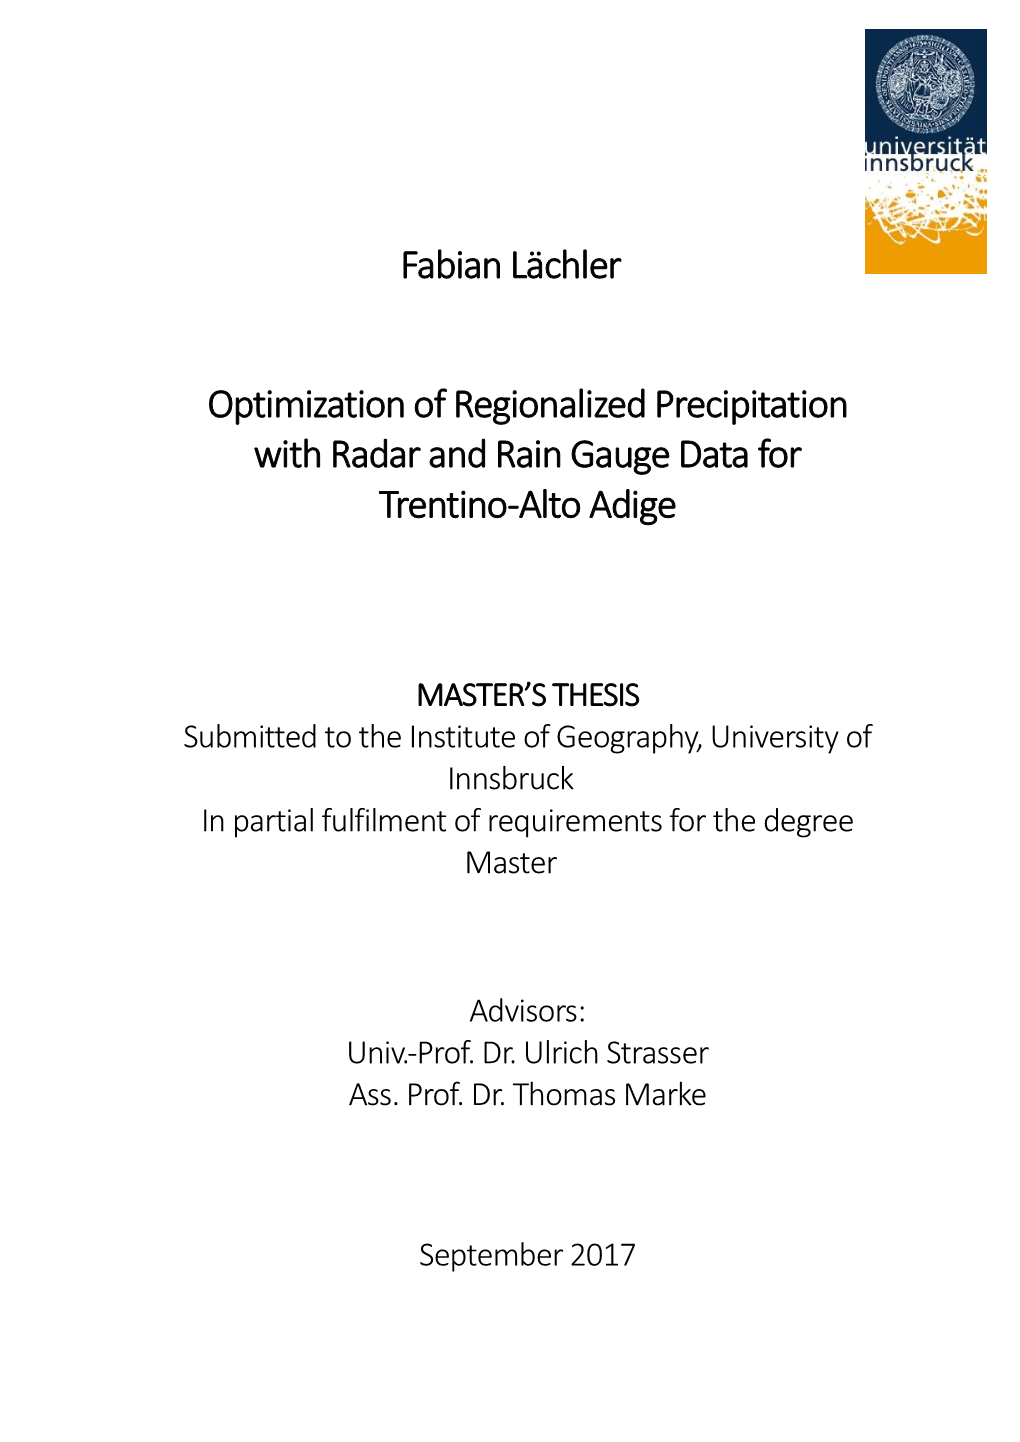 Fabian Lächler Optimization of Regionalized Precipitation with Radar and Rain Gauge Data for Trentino-Alto Adige